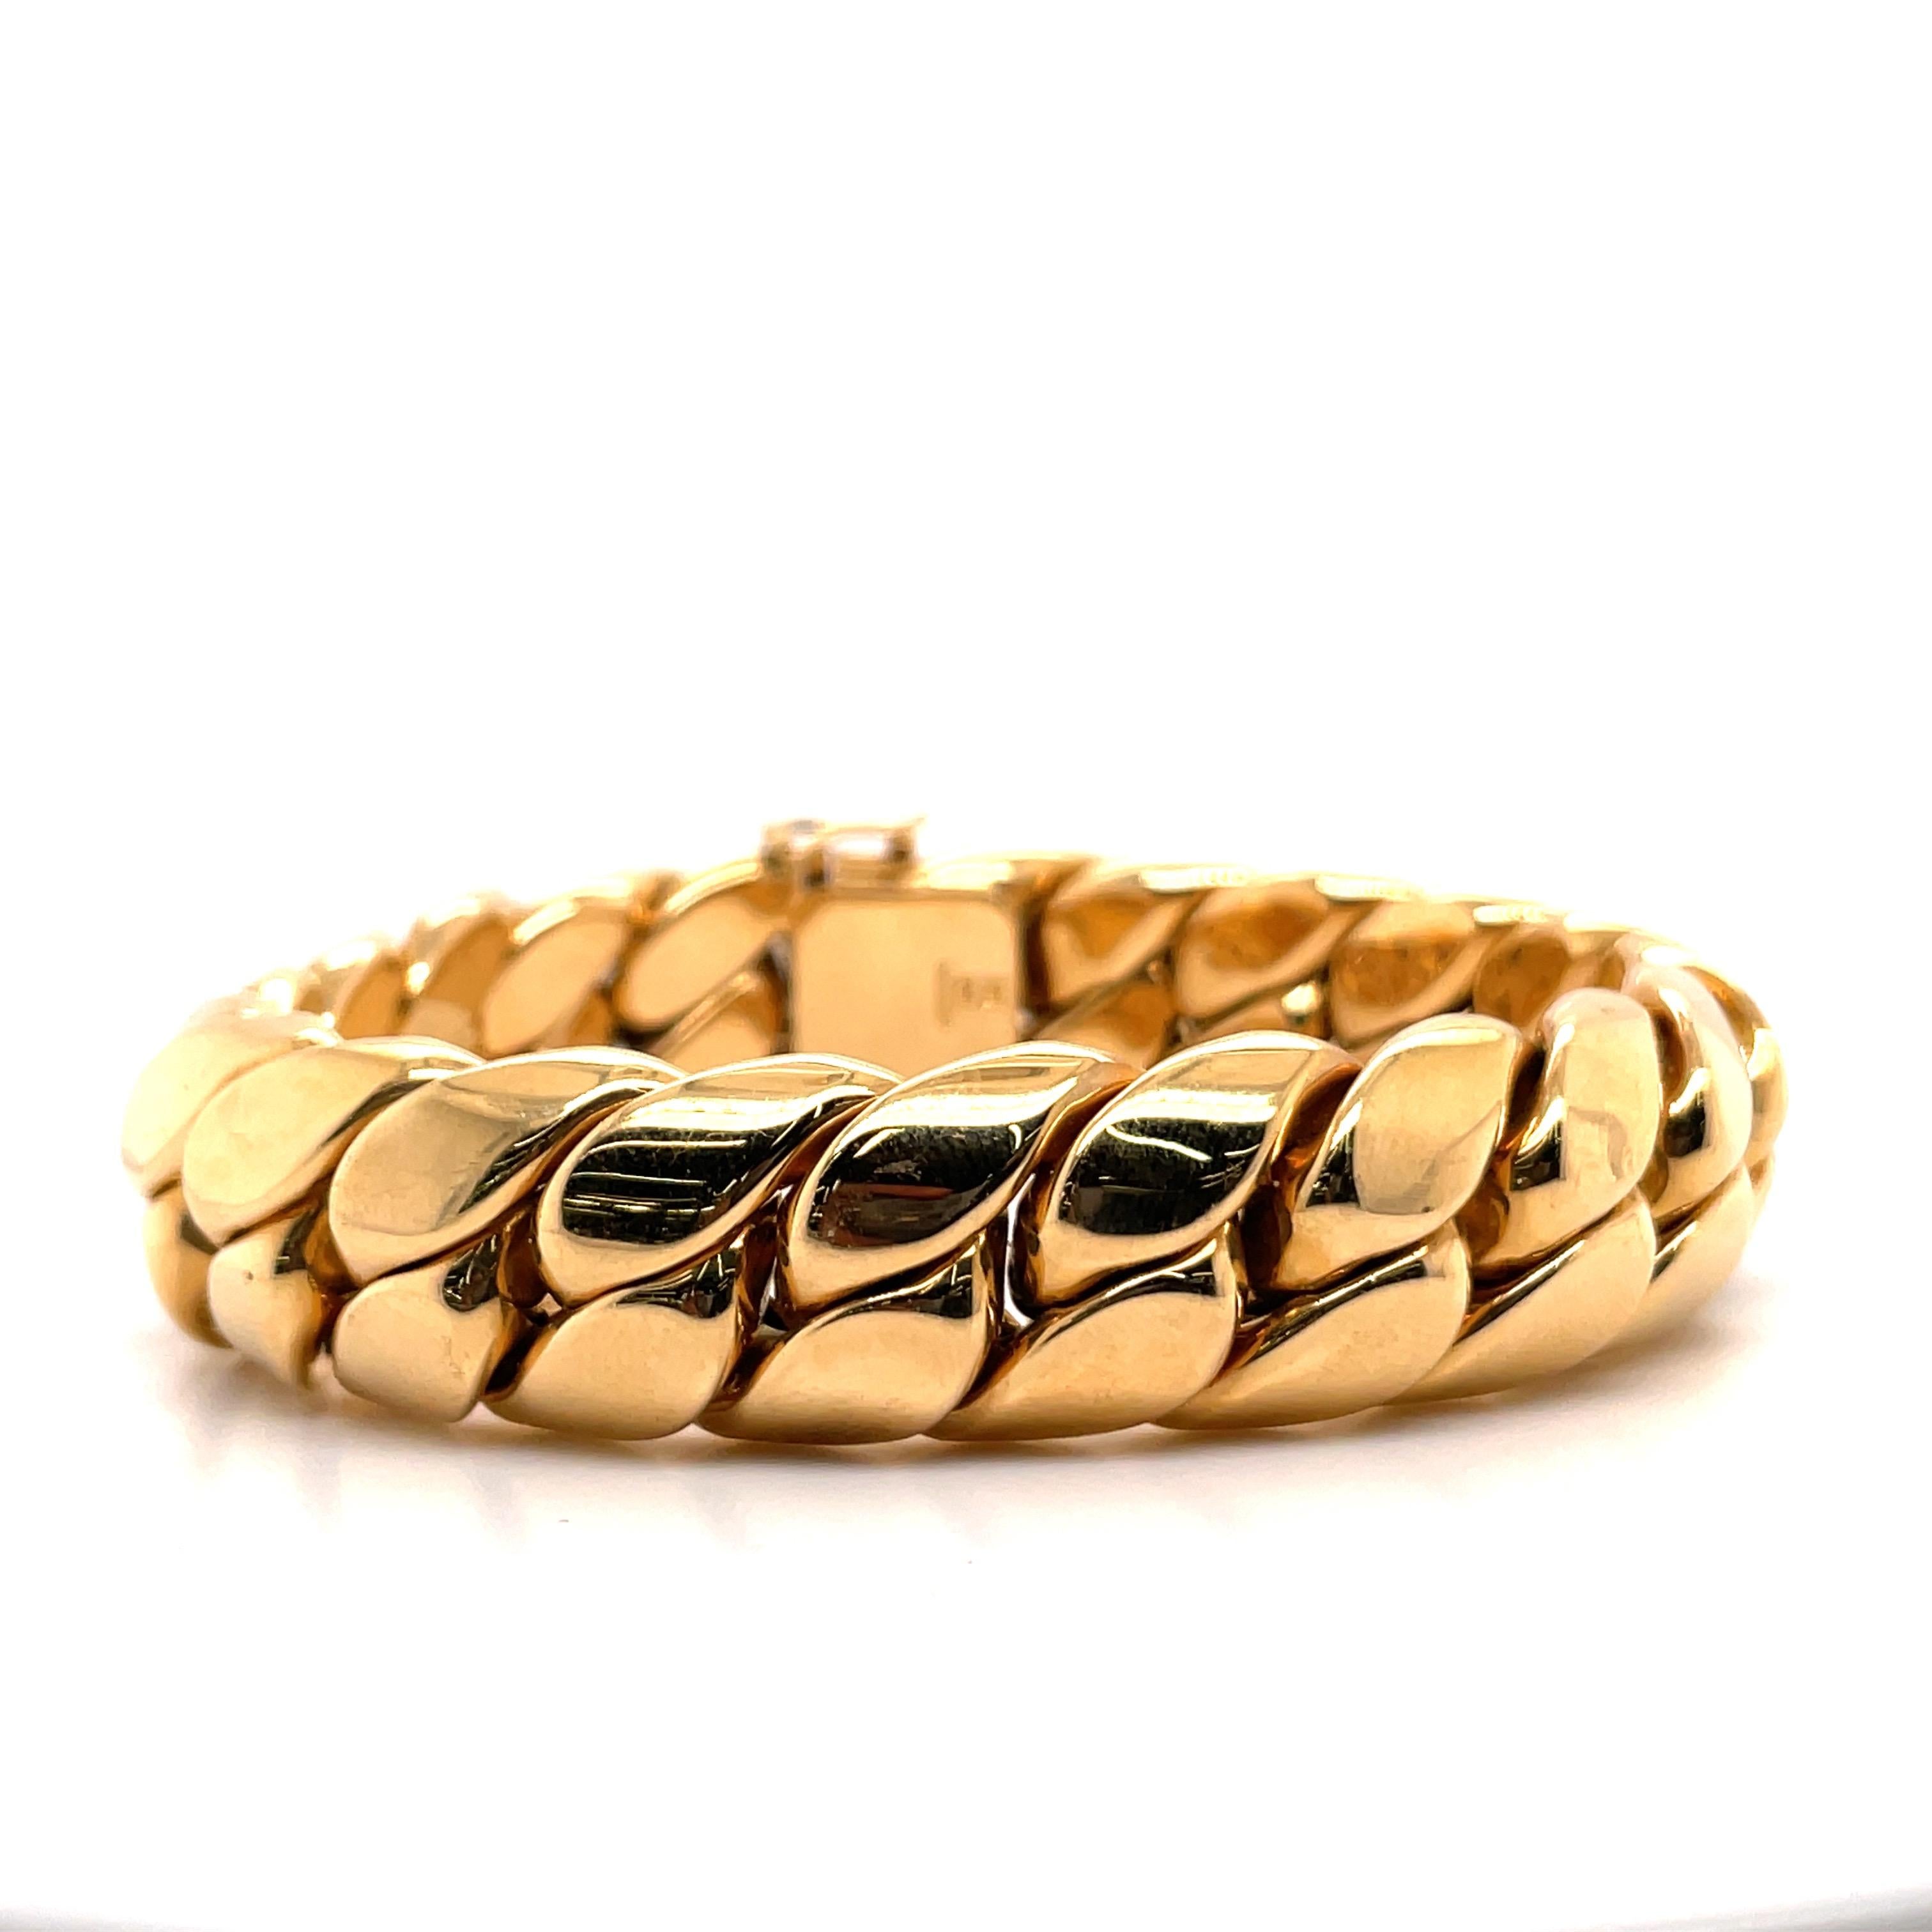 18 Karat Yellow gold Cuban link bracelet weighing 80.4 grams.
The width is 5/8 wide. 